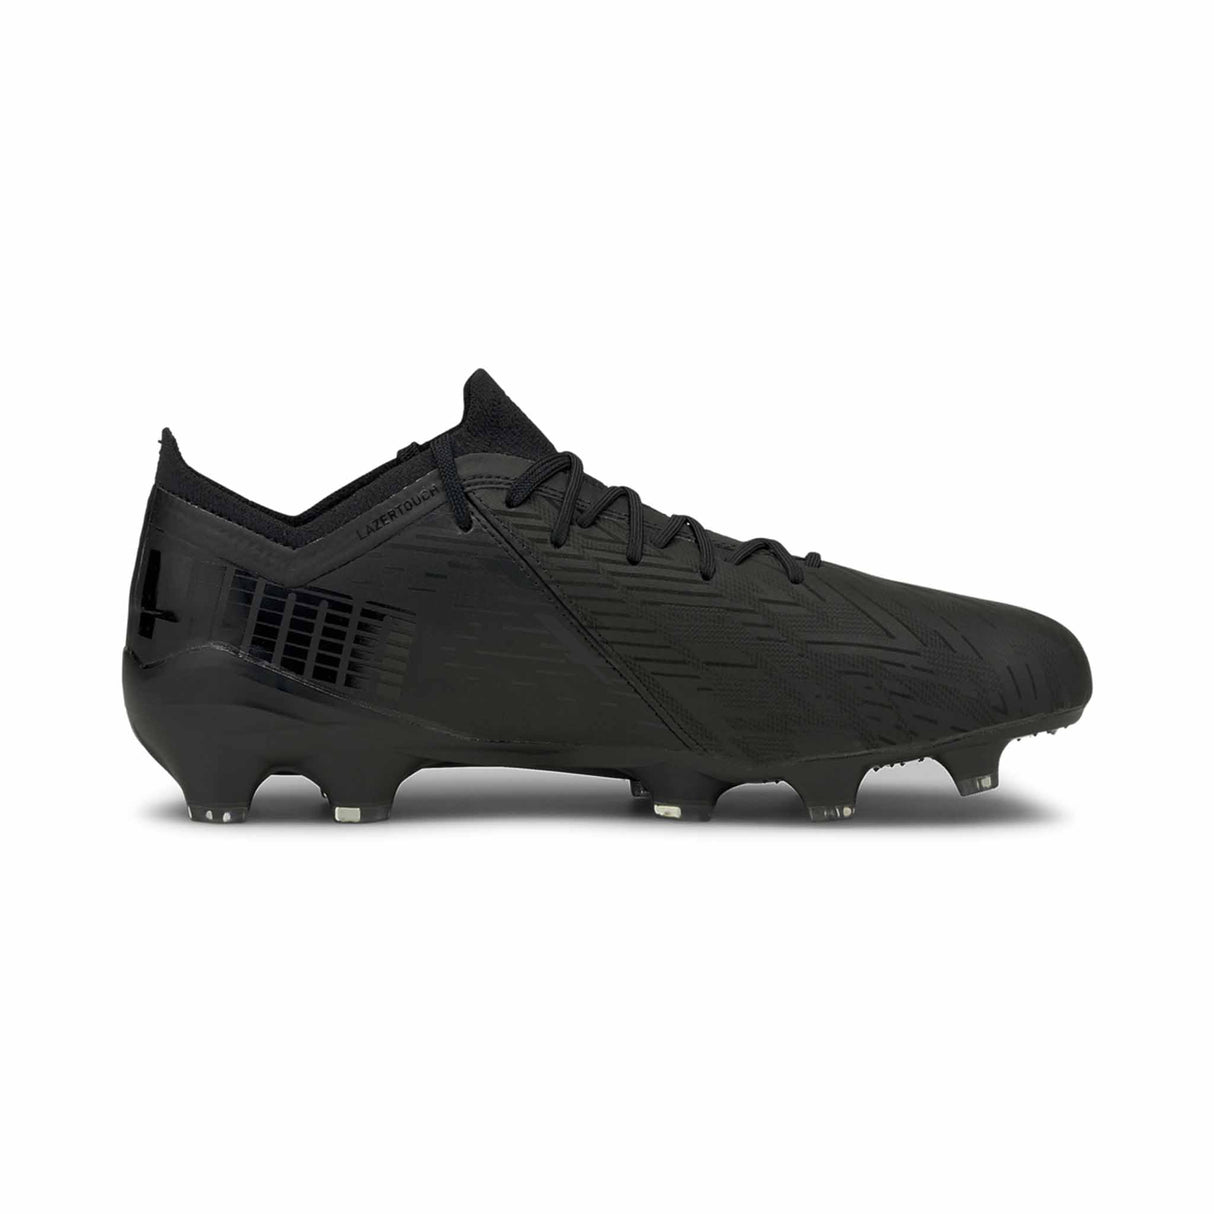 Puma Ultra 1.2 Lazertouch FG chaussures de soccer à crampons - Noir / Argent